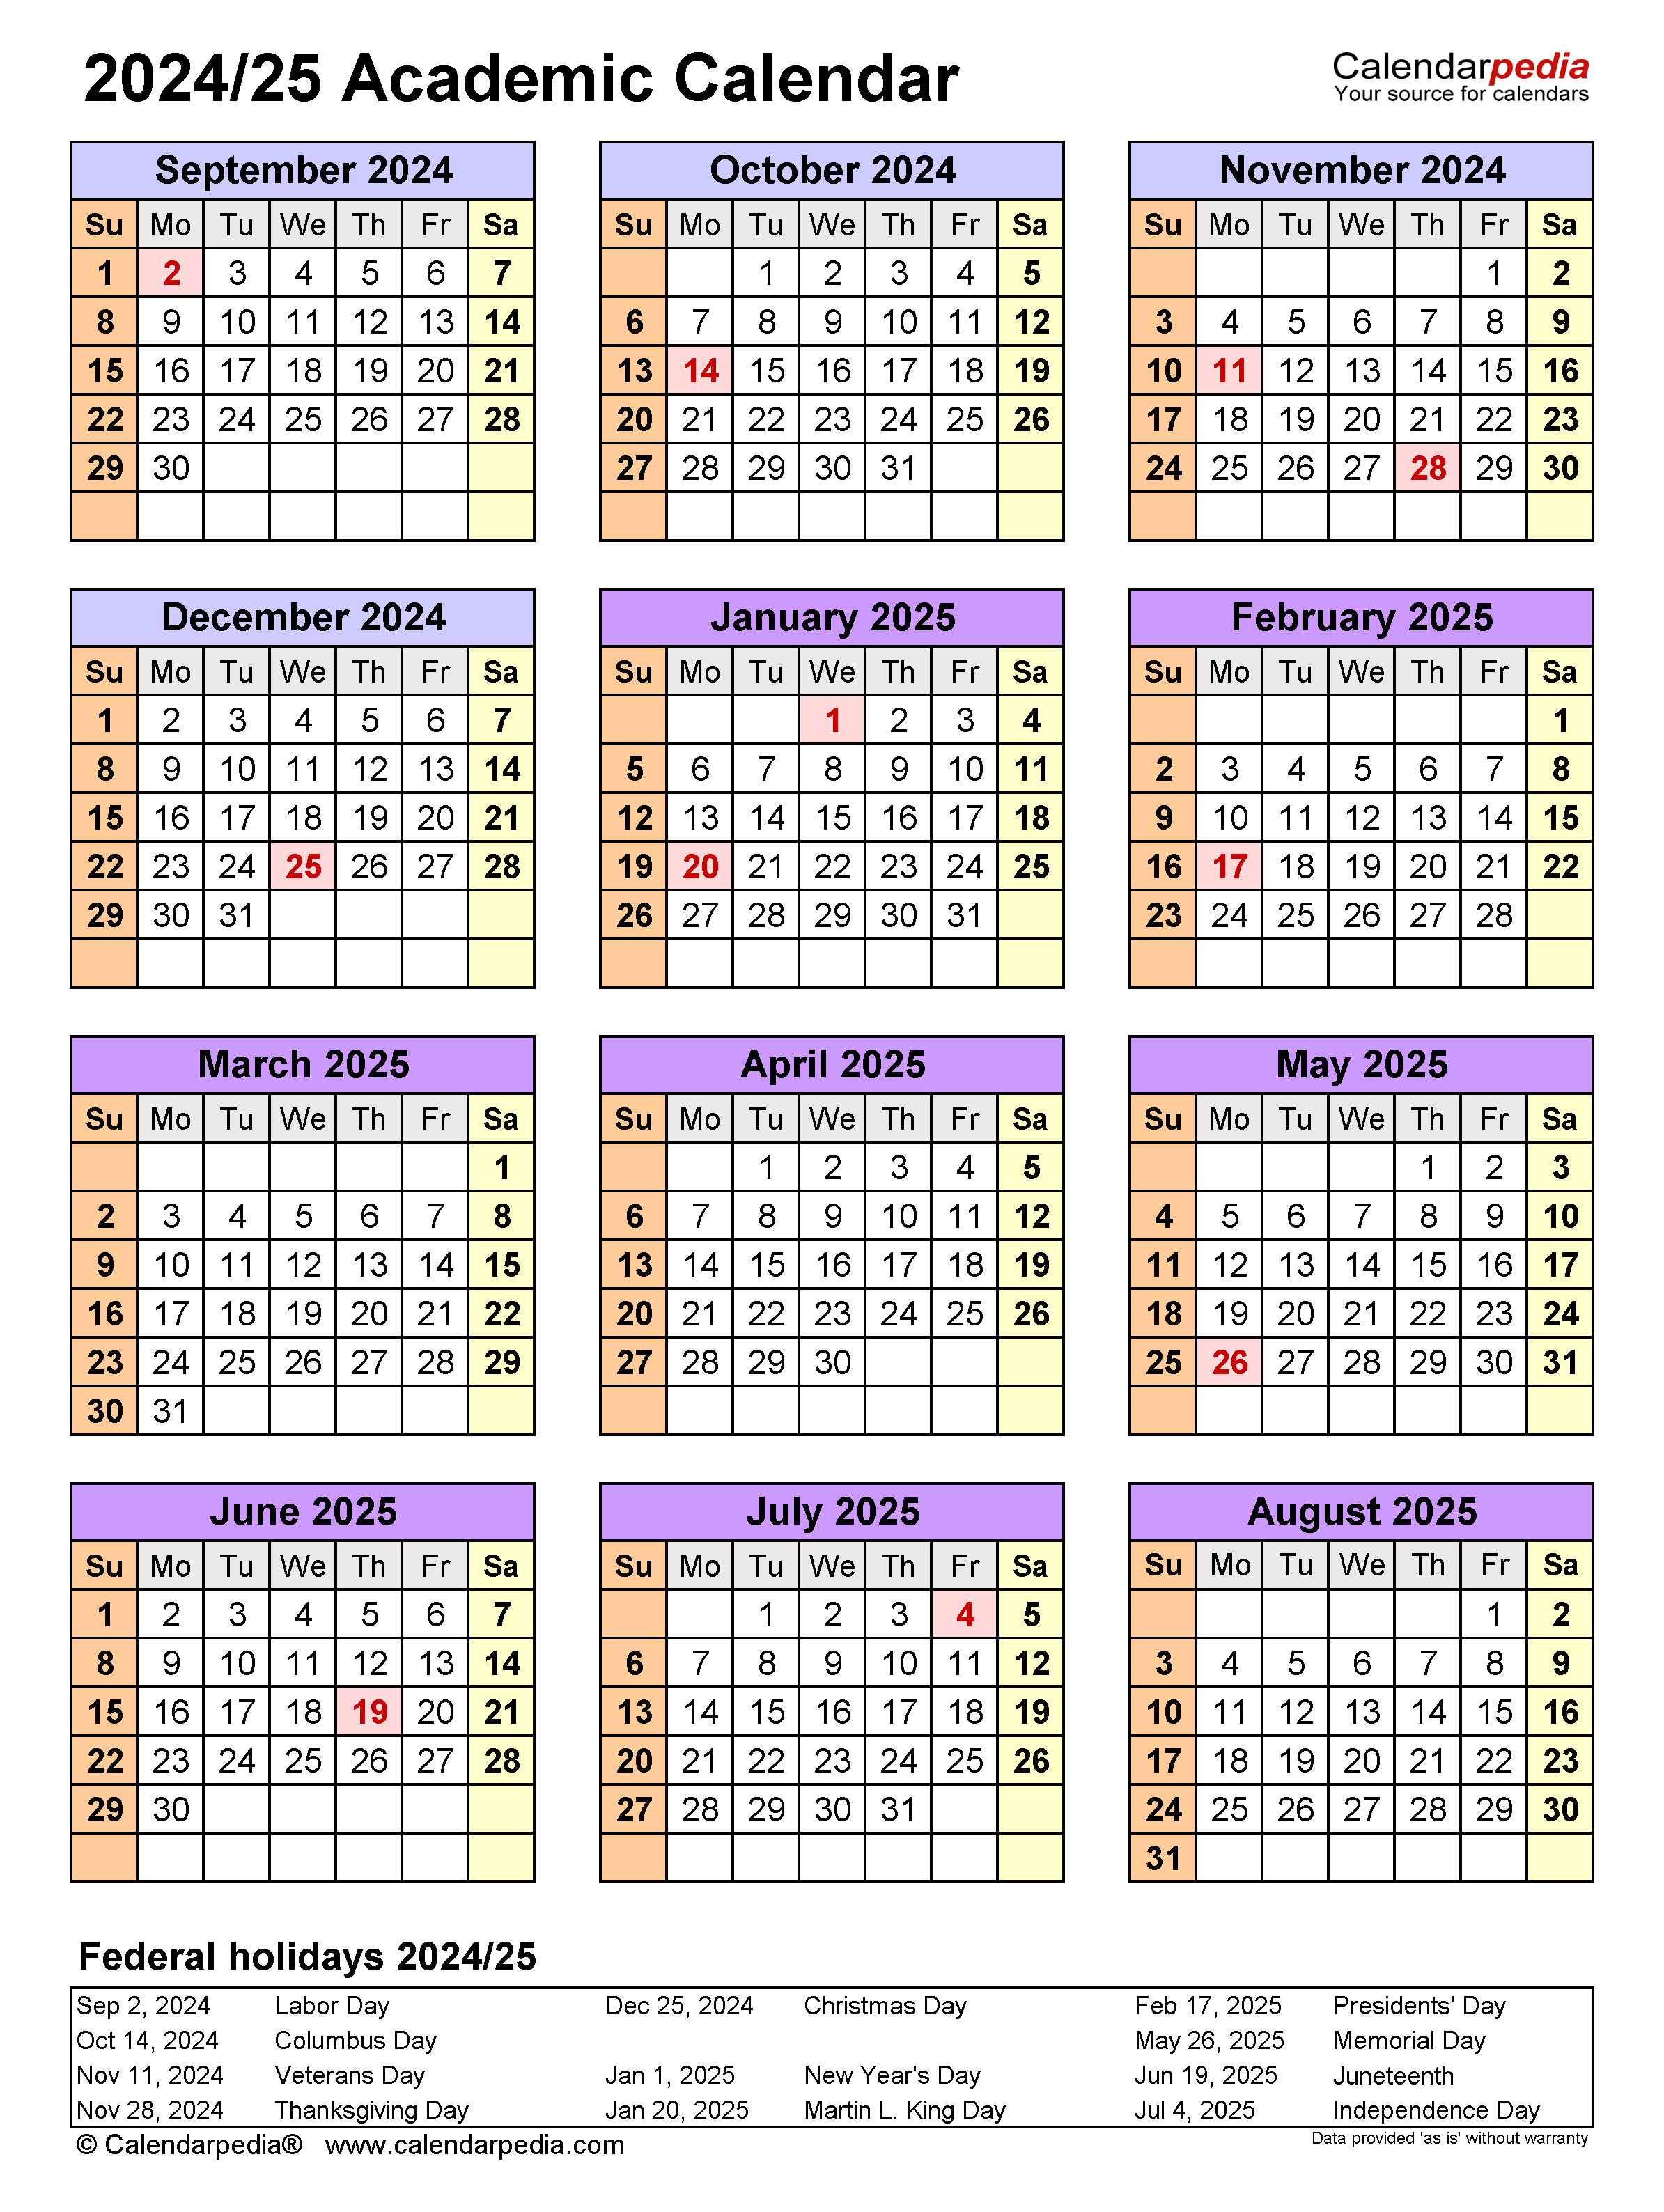 Ewu Academic Calendar 2024 2025 February 2024 Calendar - Free Printable 2024/2025 Calendar